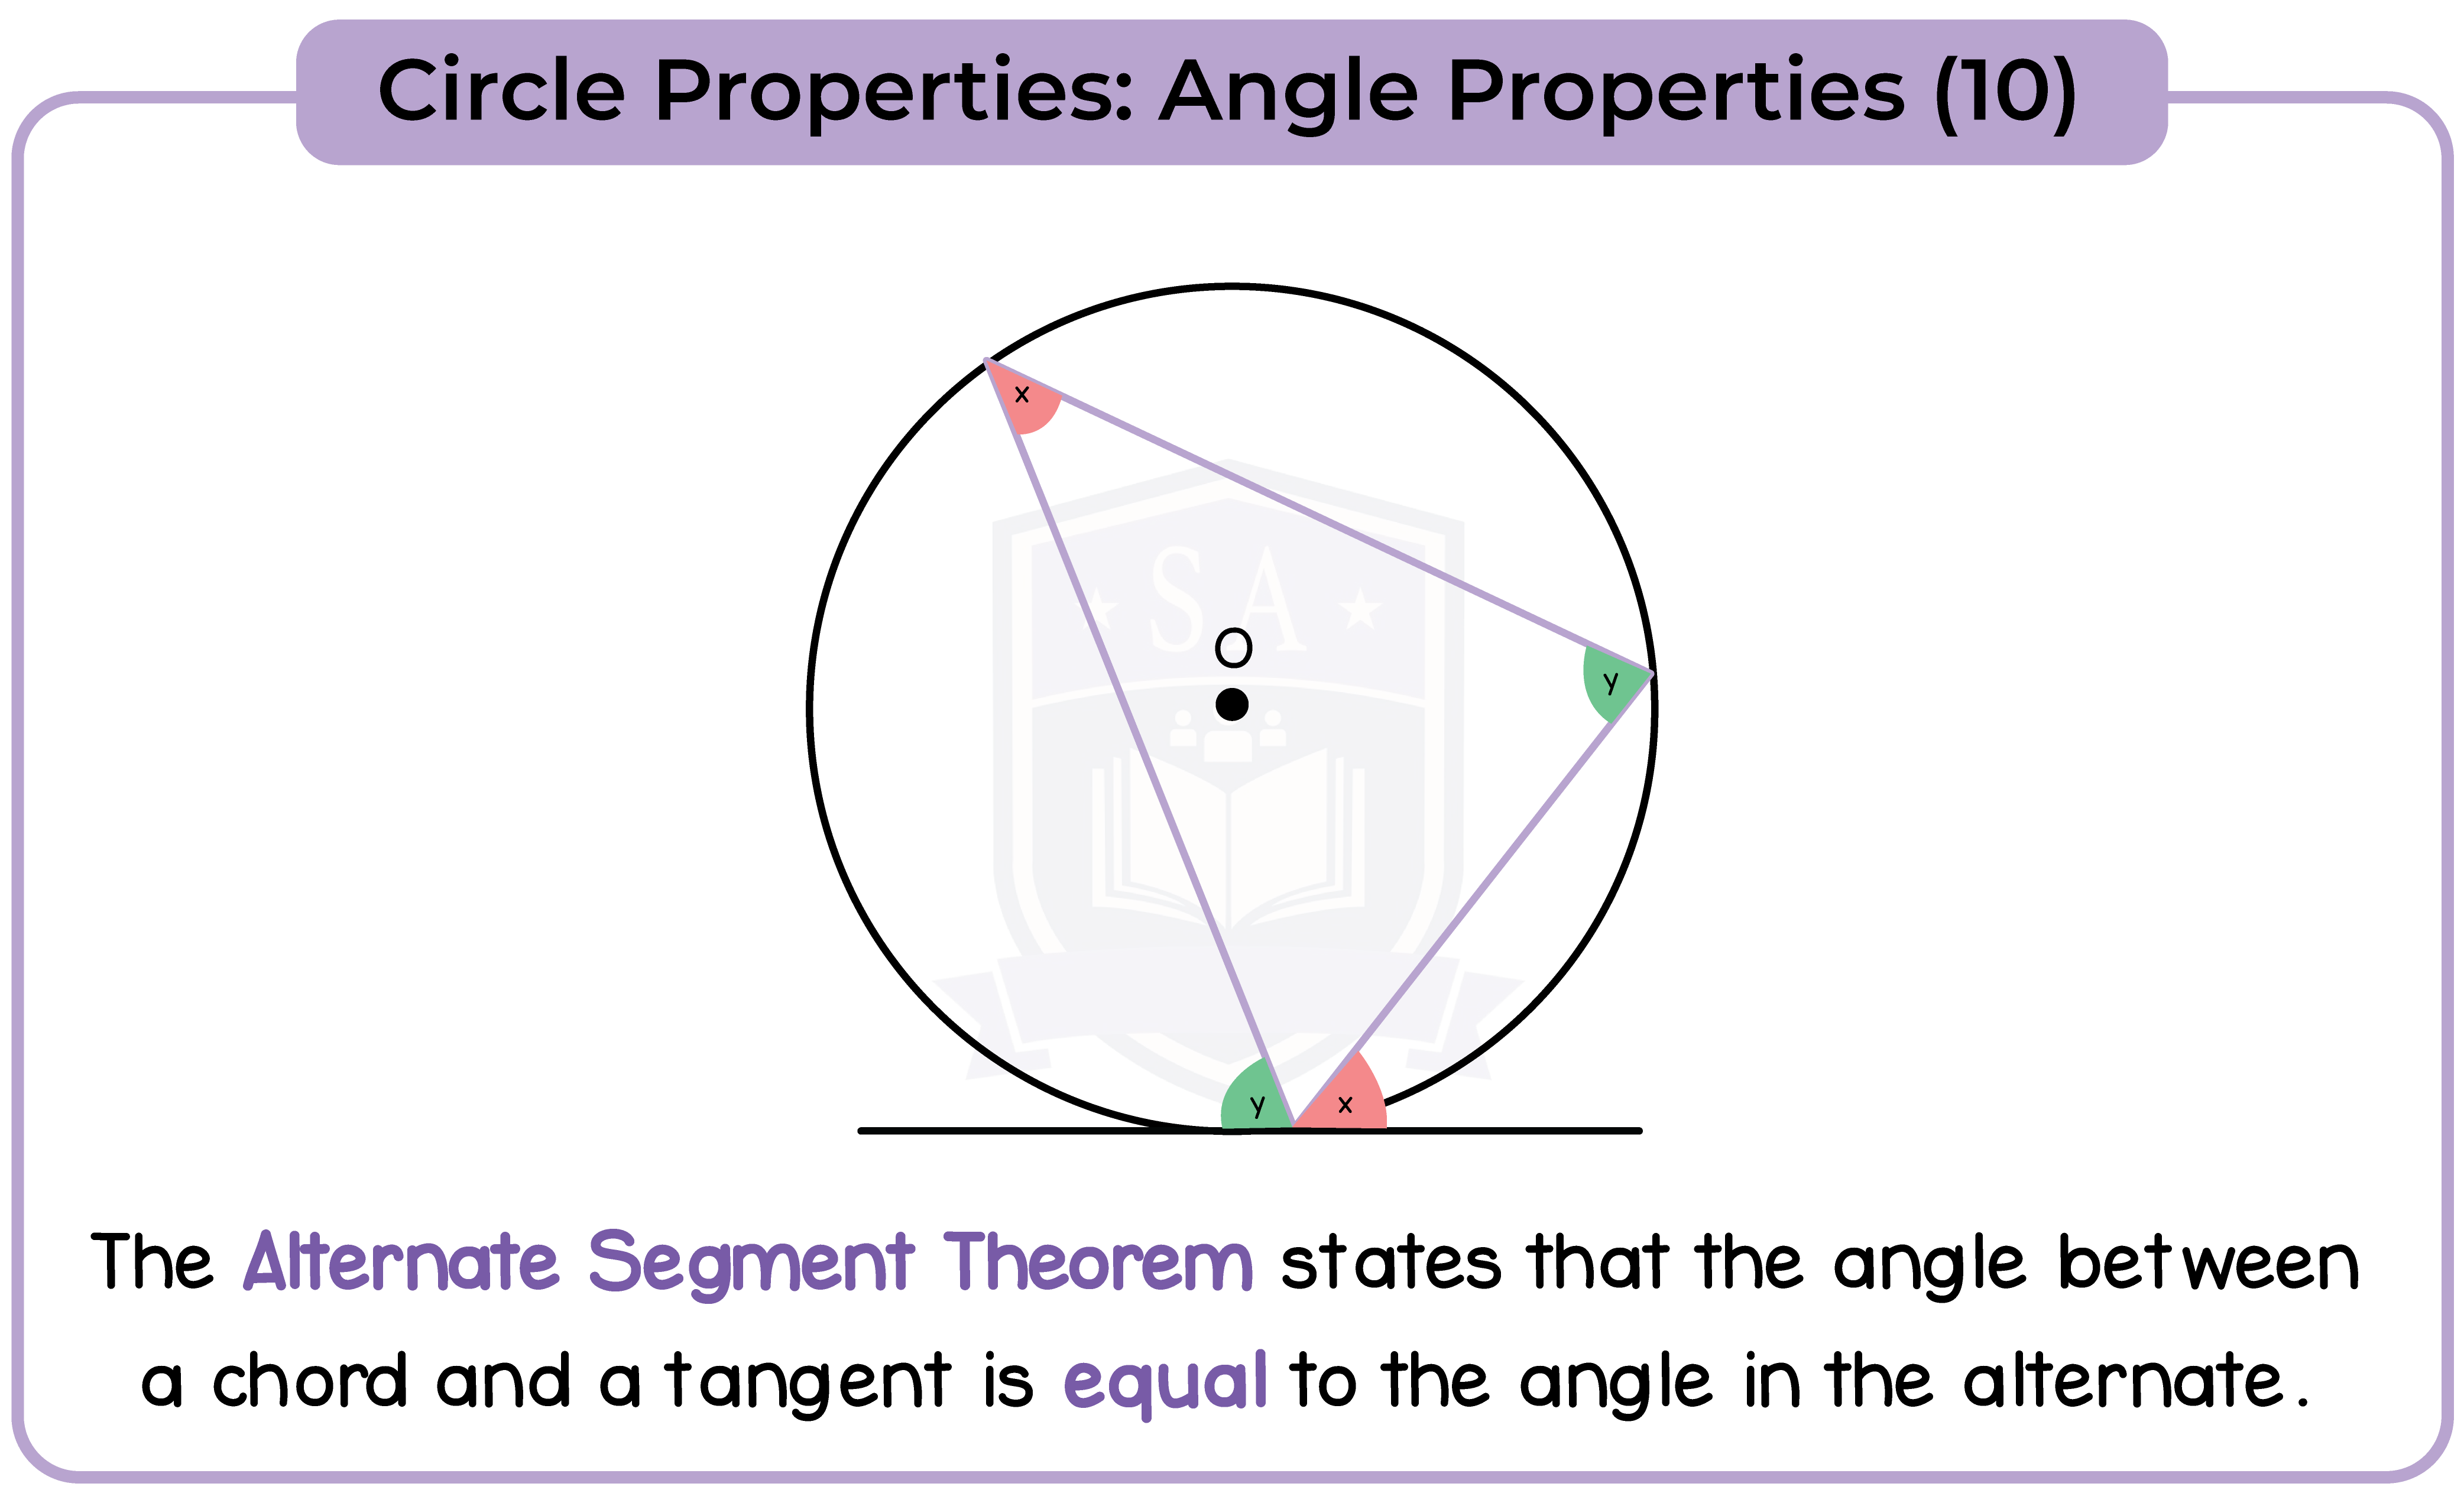 edexcel_igcse_mathematics a_topic 30_circle properties_014_.Circle Properties: Angle Properties (10)